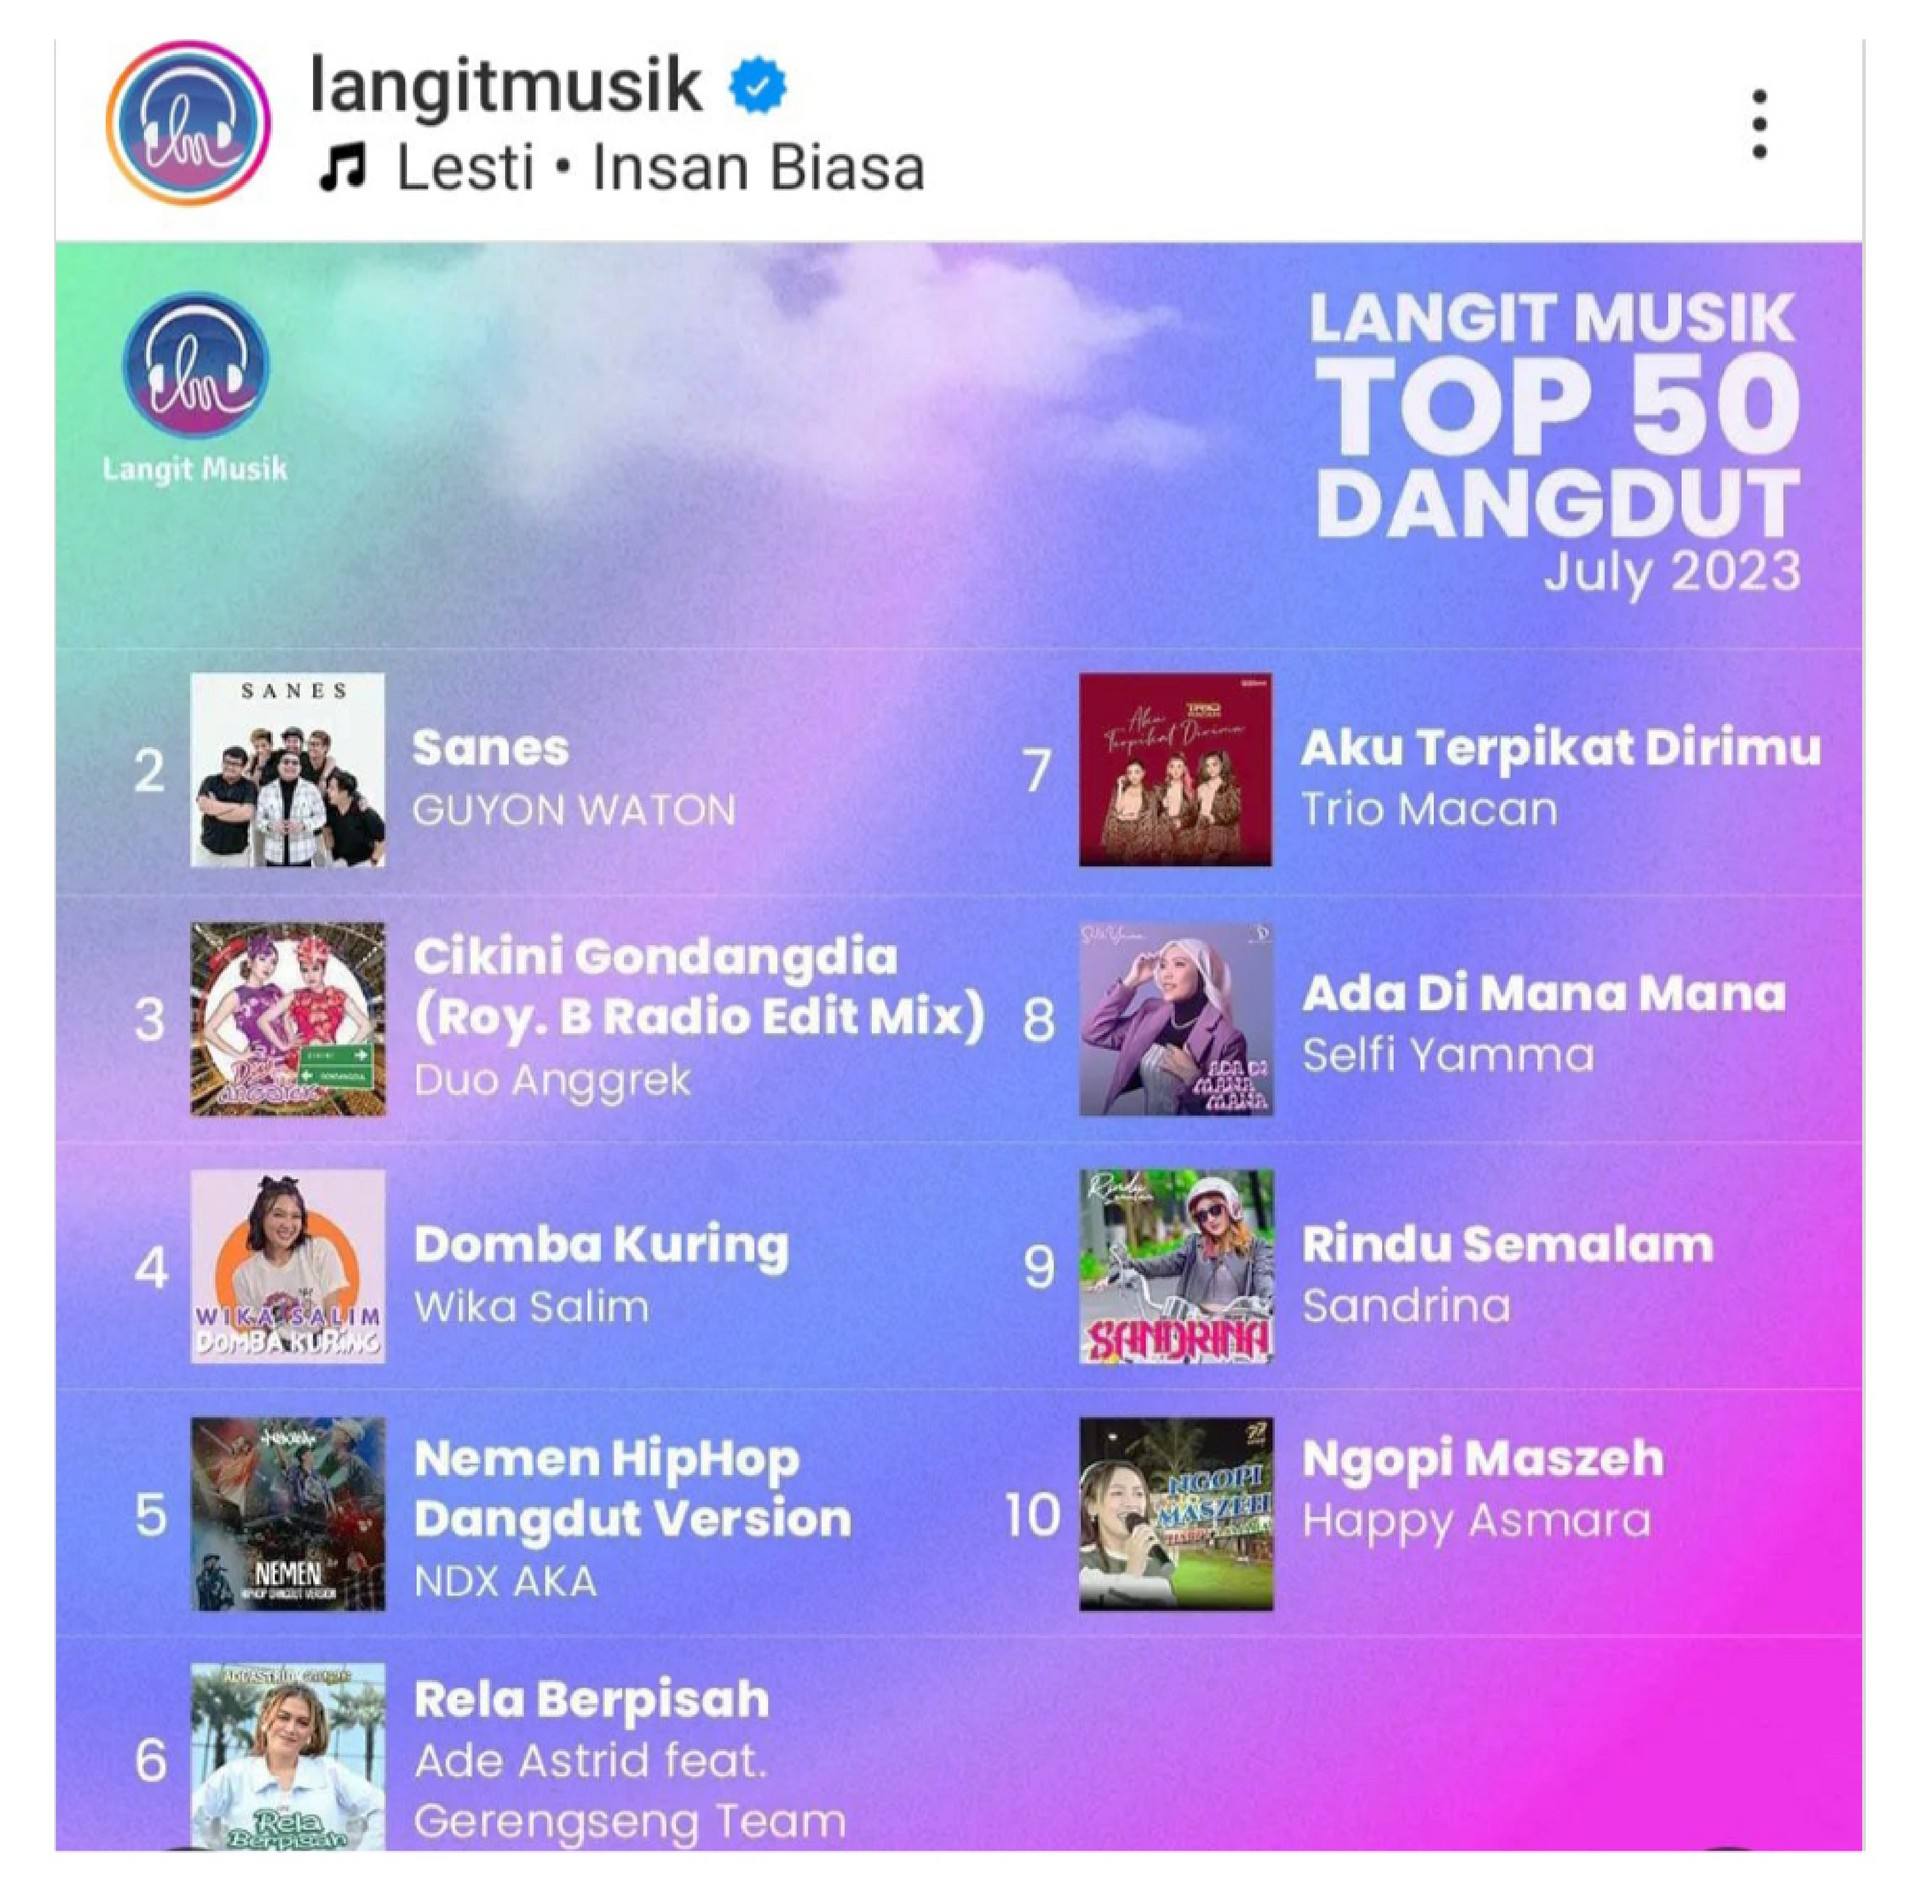 Duo Anggrek Cikini Gondangdia No 2 Top 50 Dangdut Langit Musik